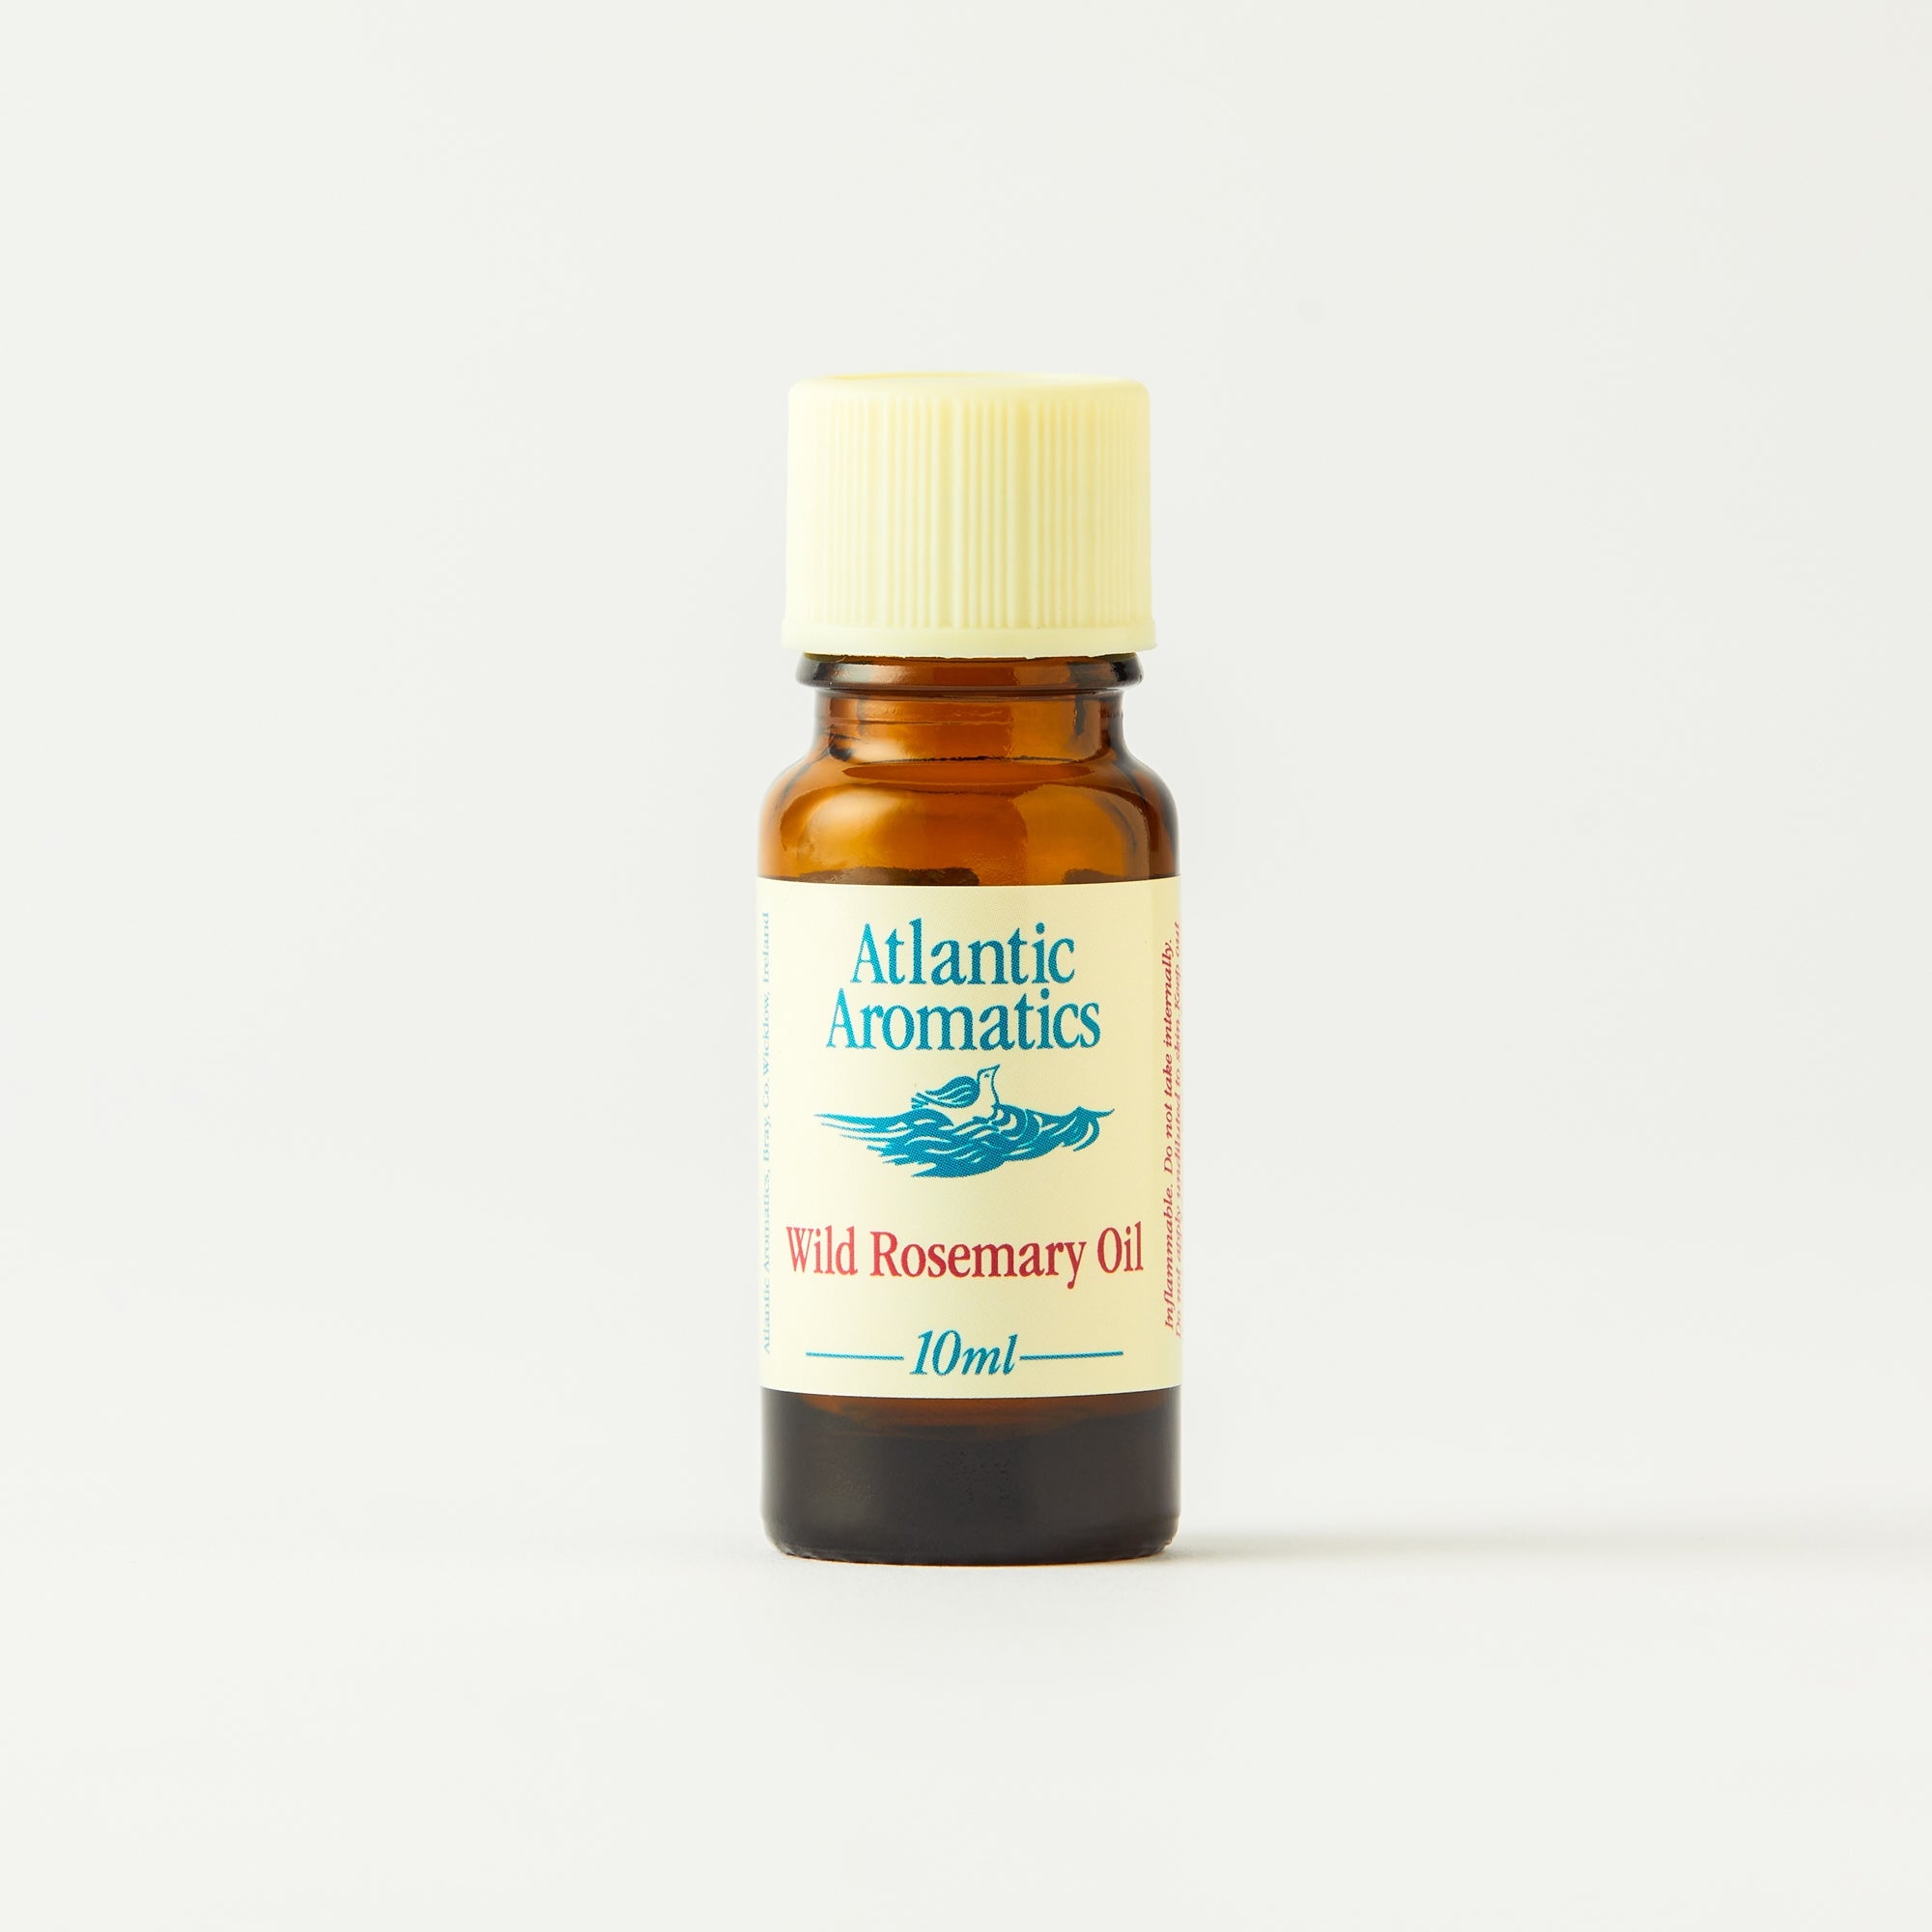 Atlantic Aromatics Wild Rosemary Oil